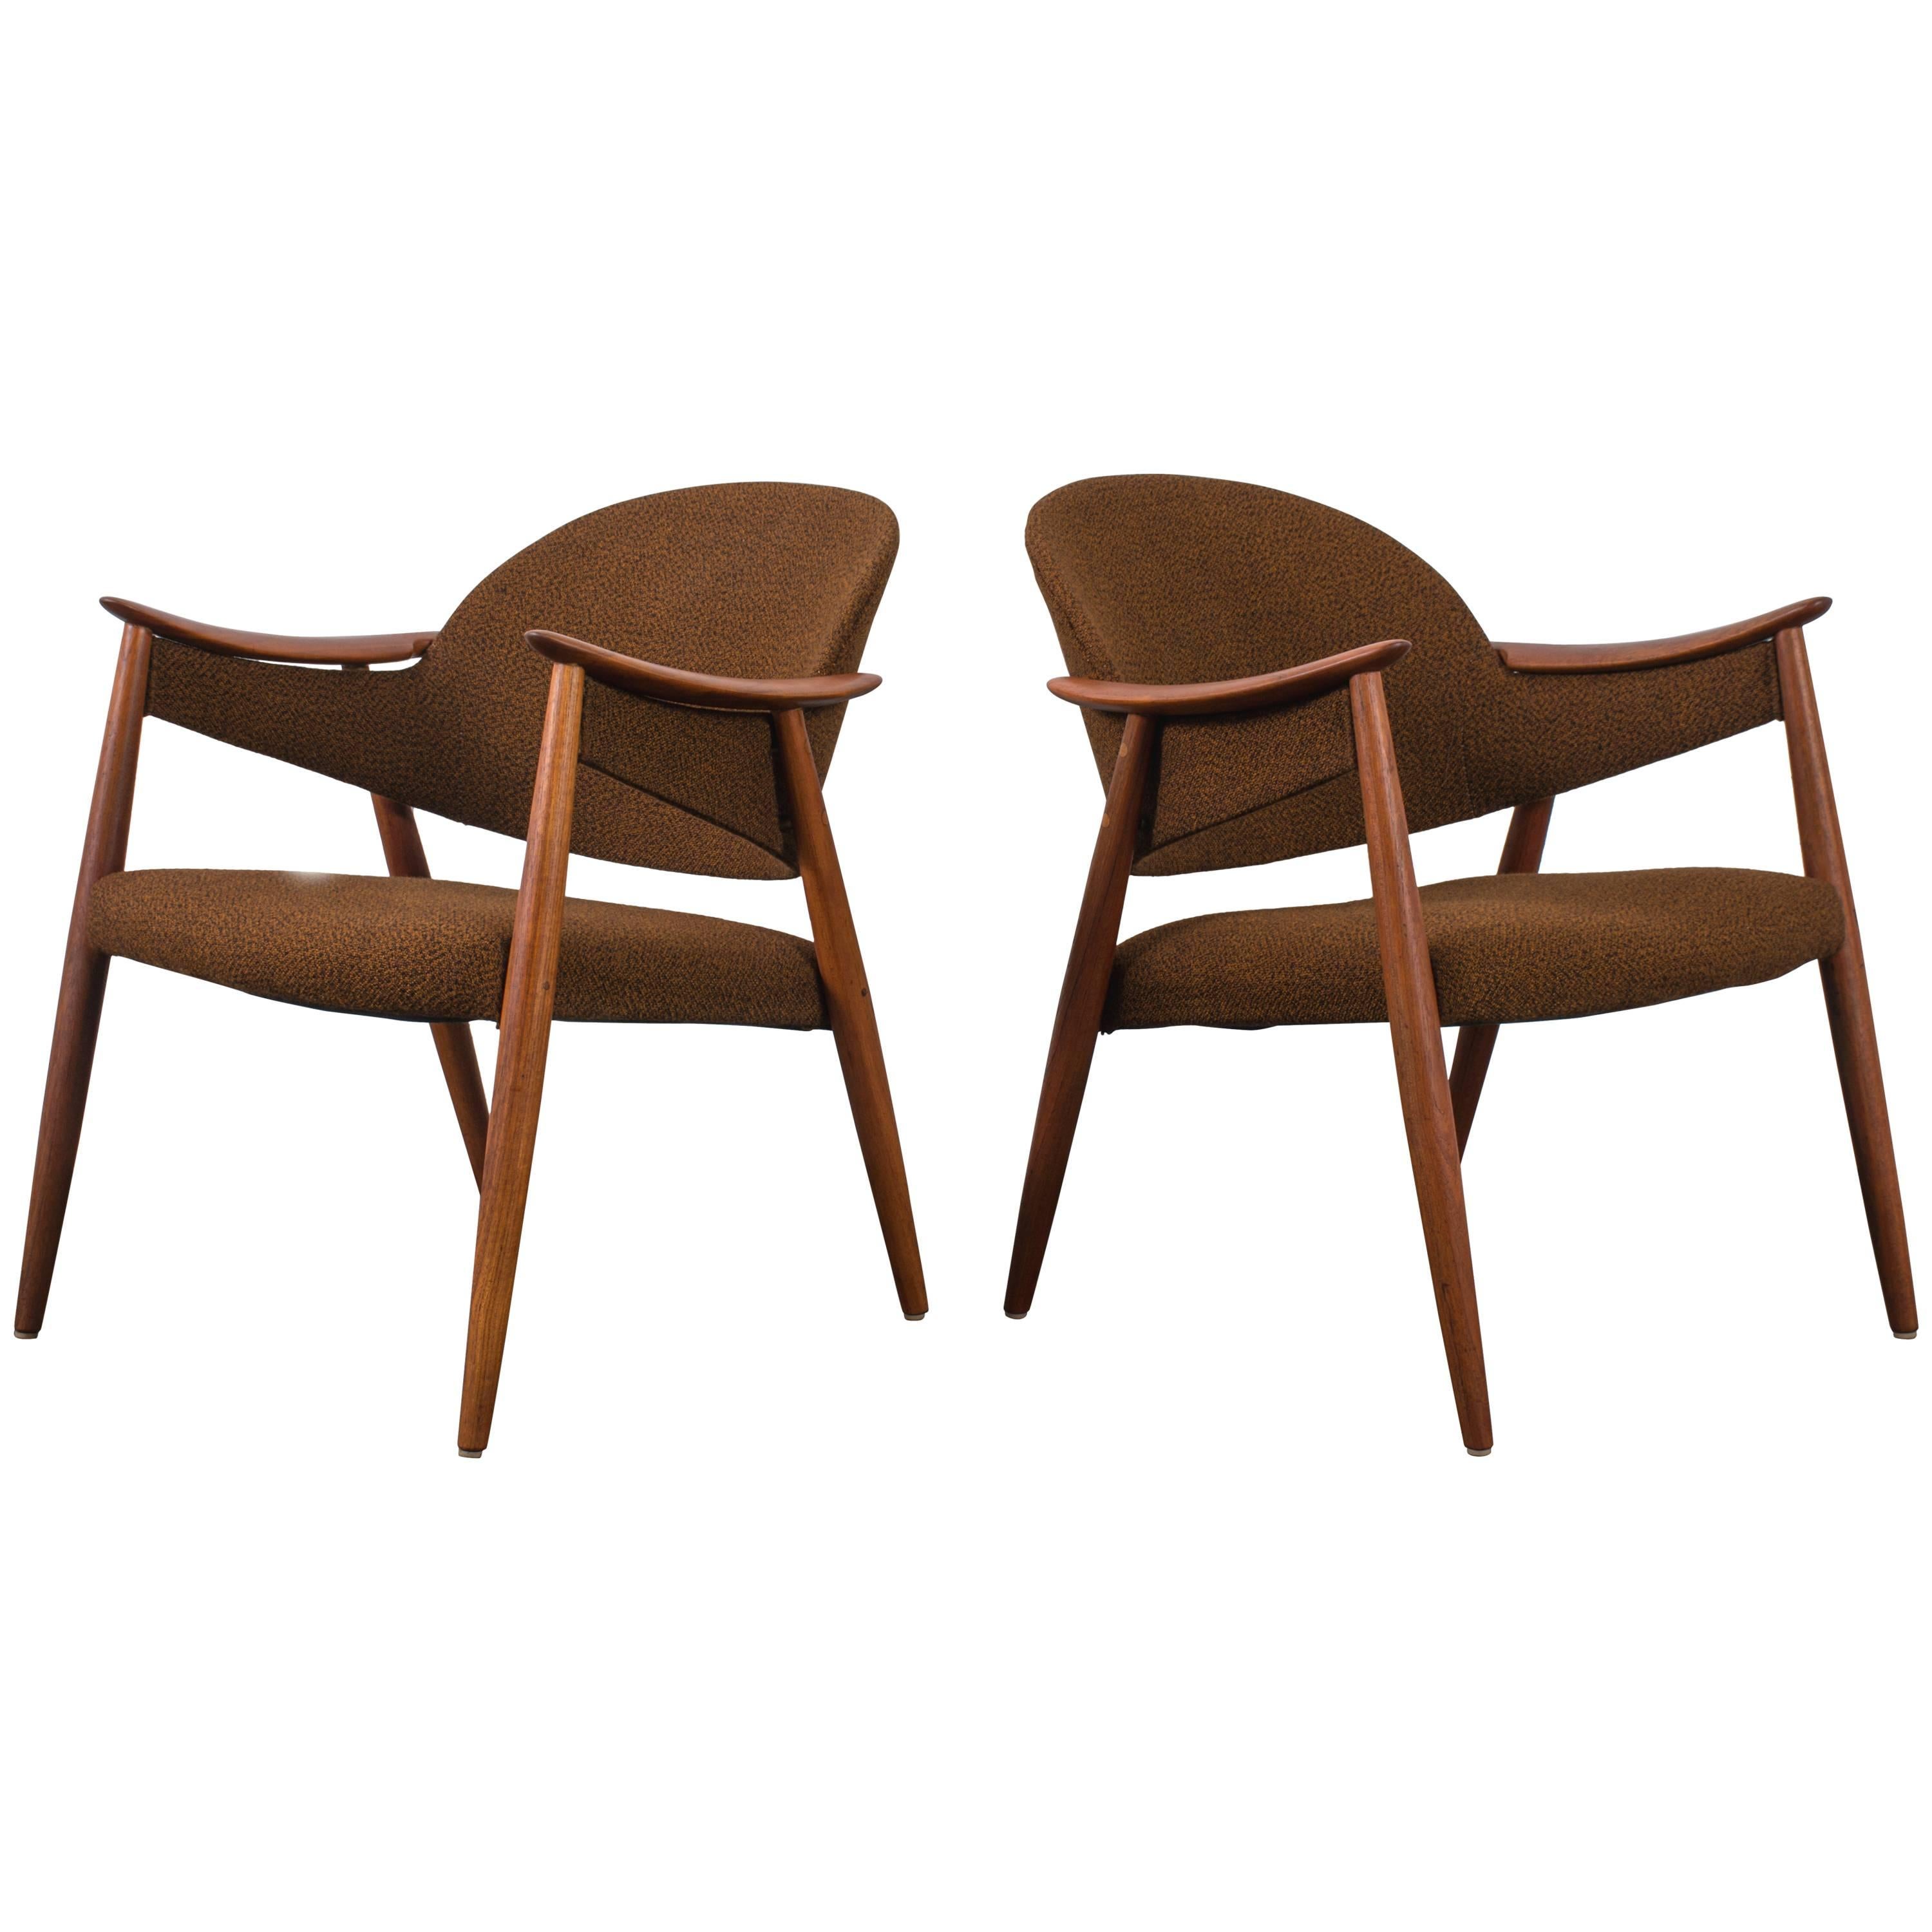 Gerhard Berg Teak Lounge Chairs, Norway, 1950s For Sale